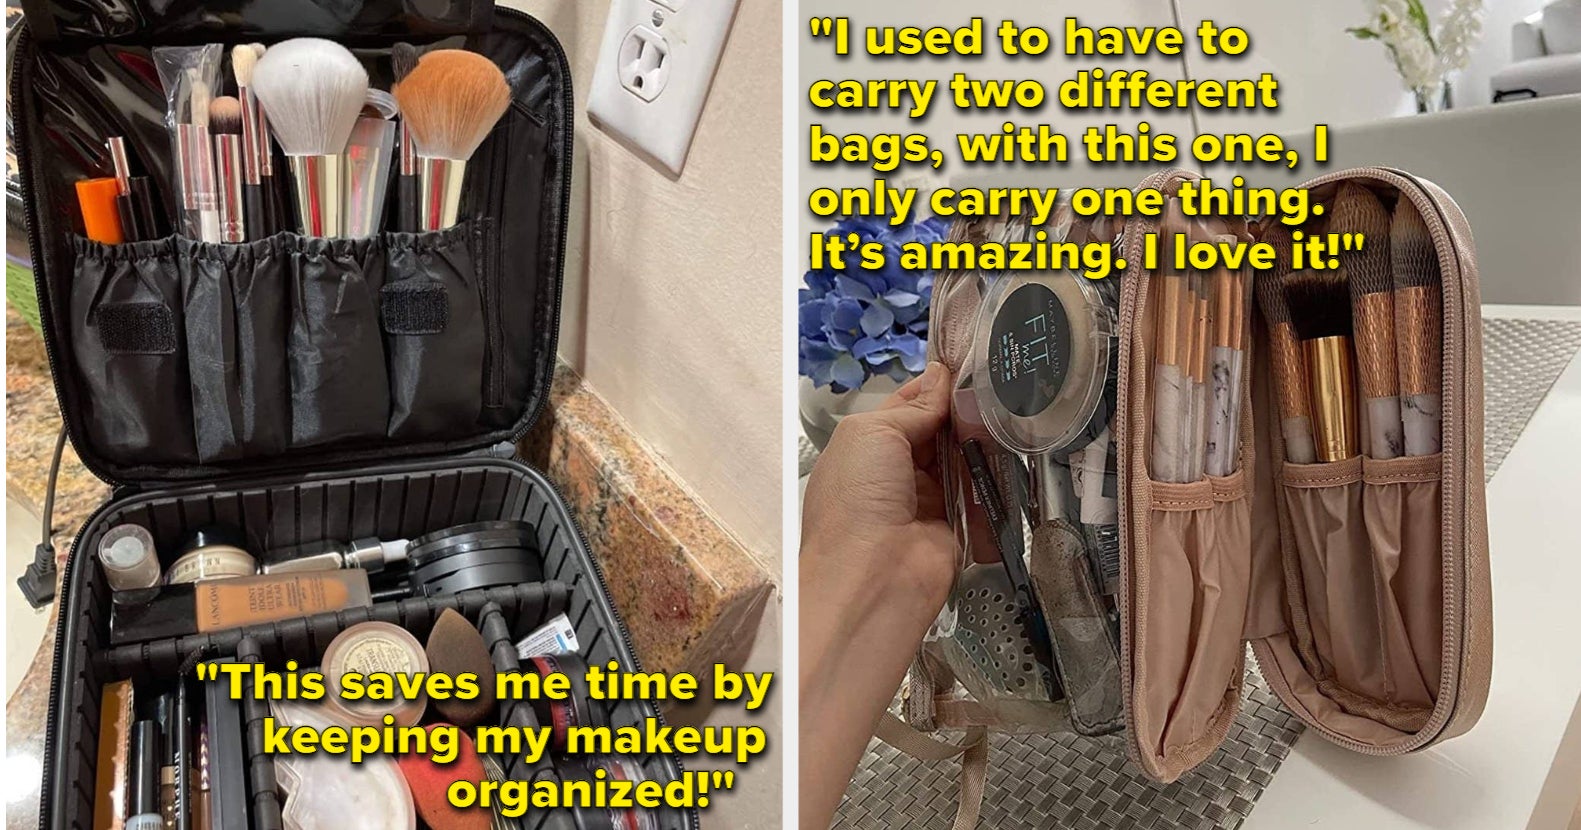 Cosmetic Case Makeup Brush Organizer Makeup Artist Case Functional Cosmetic  Bag Makeup Handbag for Travel & Home Gift 